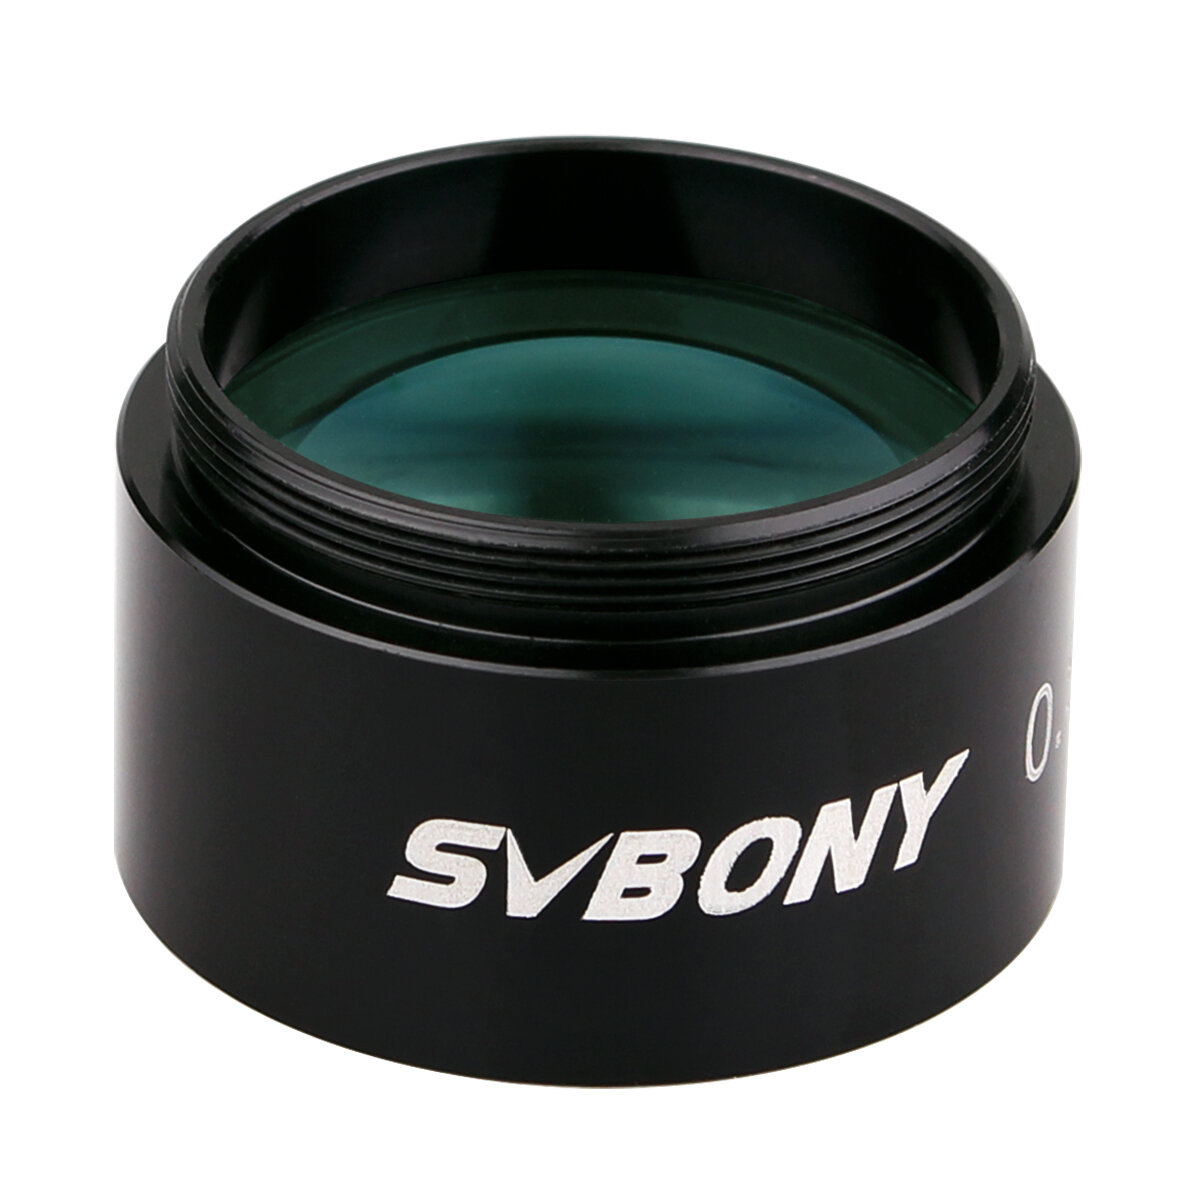 SVBONY 1,25 "volledig multi-gecoate 0,5x focale reductor voor telescoop oculair fotografie en observ